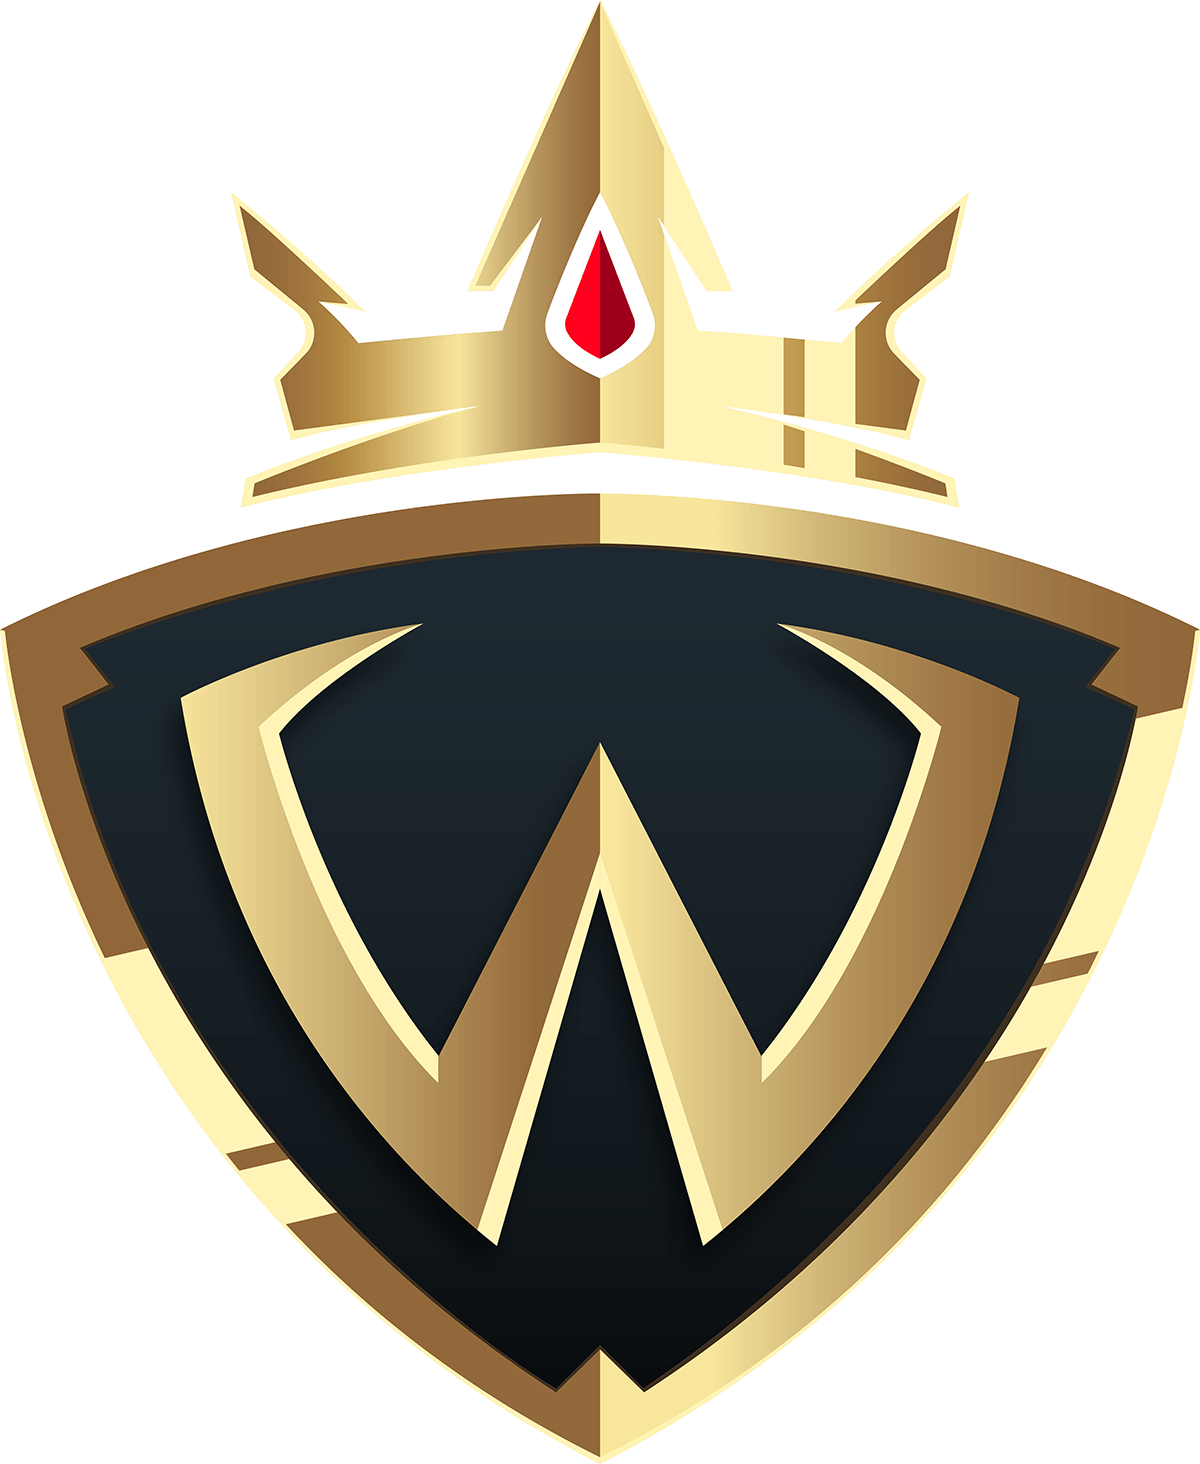 text logo w logo Gaming Logo mascot logo wizard logo esports logo  free fire pubg Fortnite Apex Legend